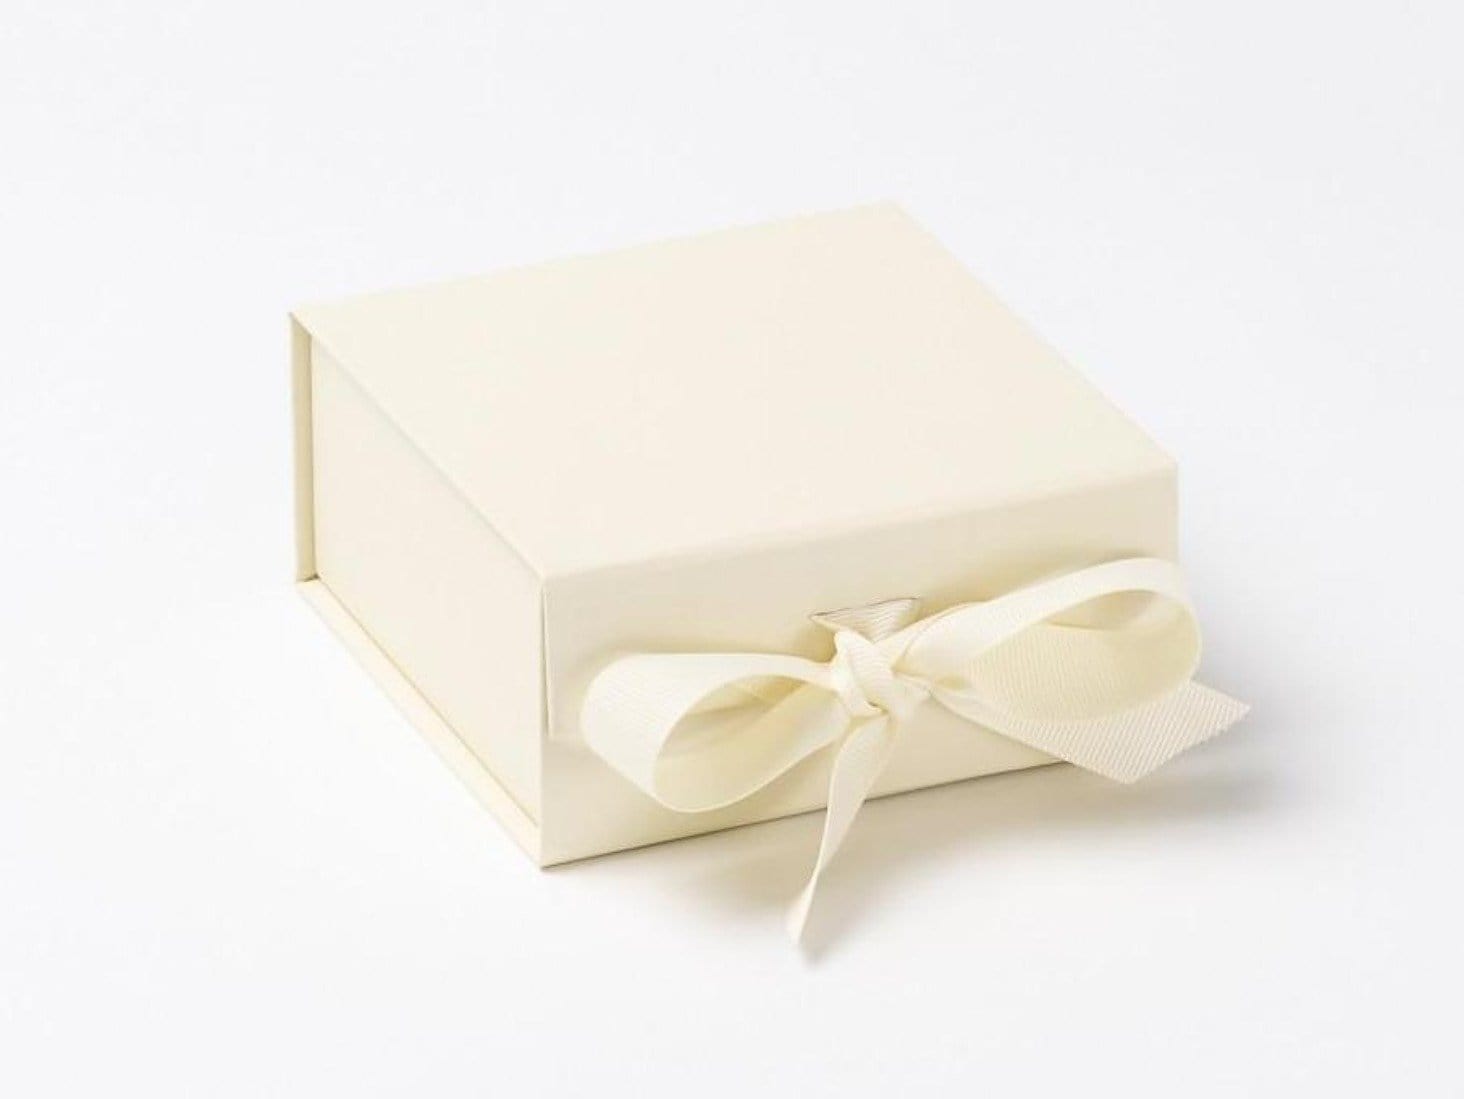 Small ivory folding gift box or wedding favour box from Foldabox